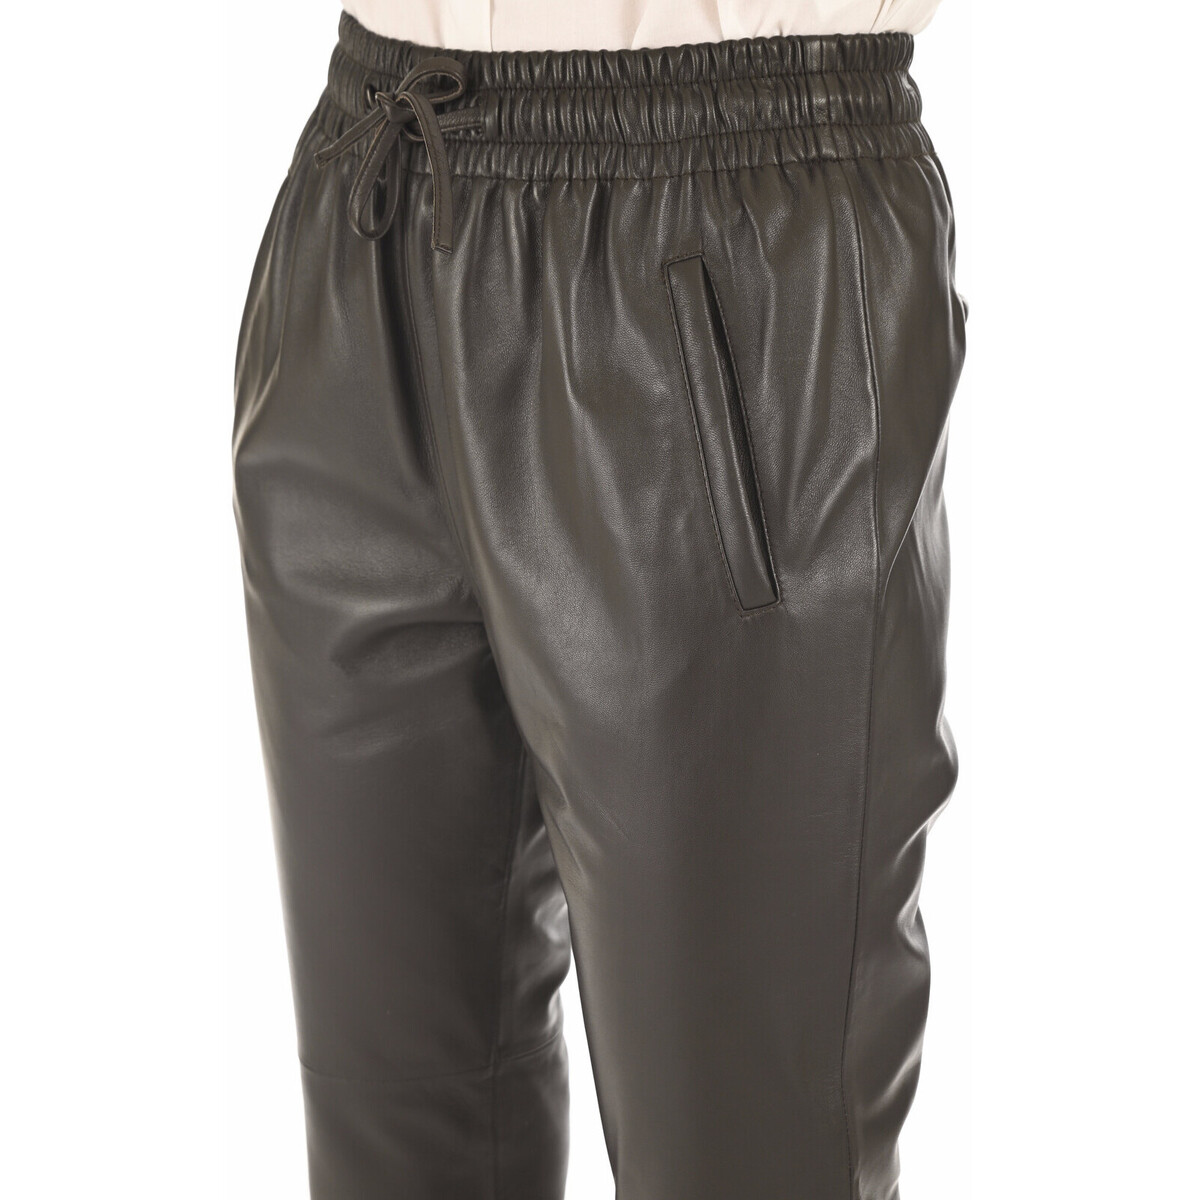 Oakwood Marron Pantalon jogpant cuir marron foncé-044702 sjJtGoe2